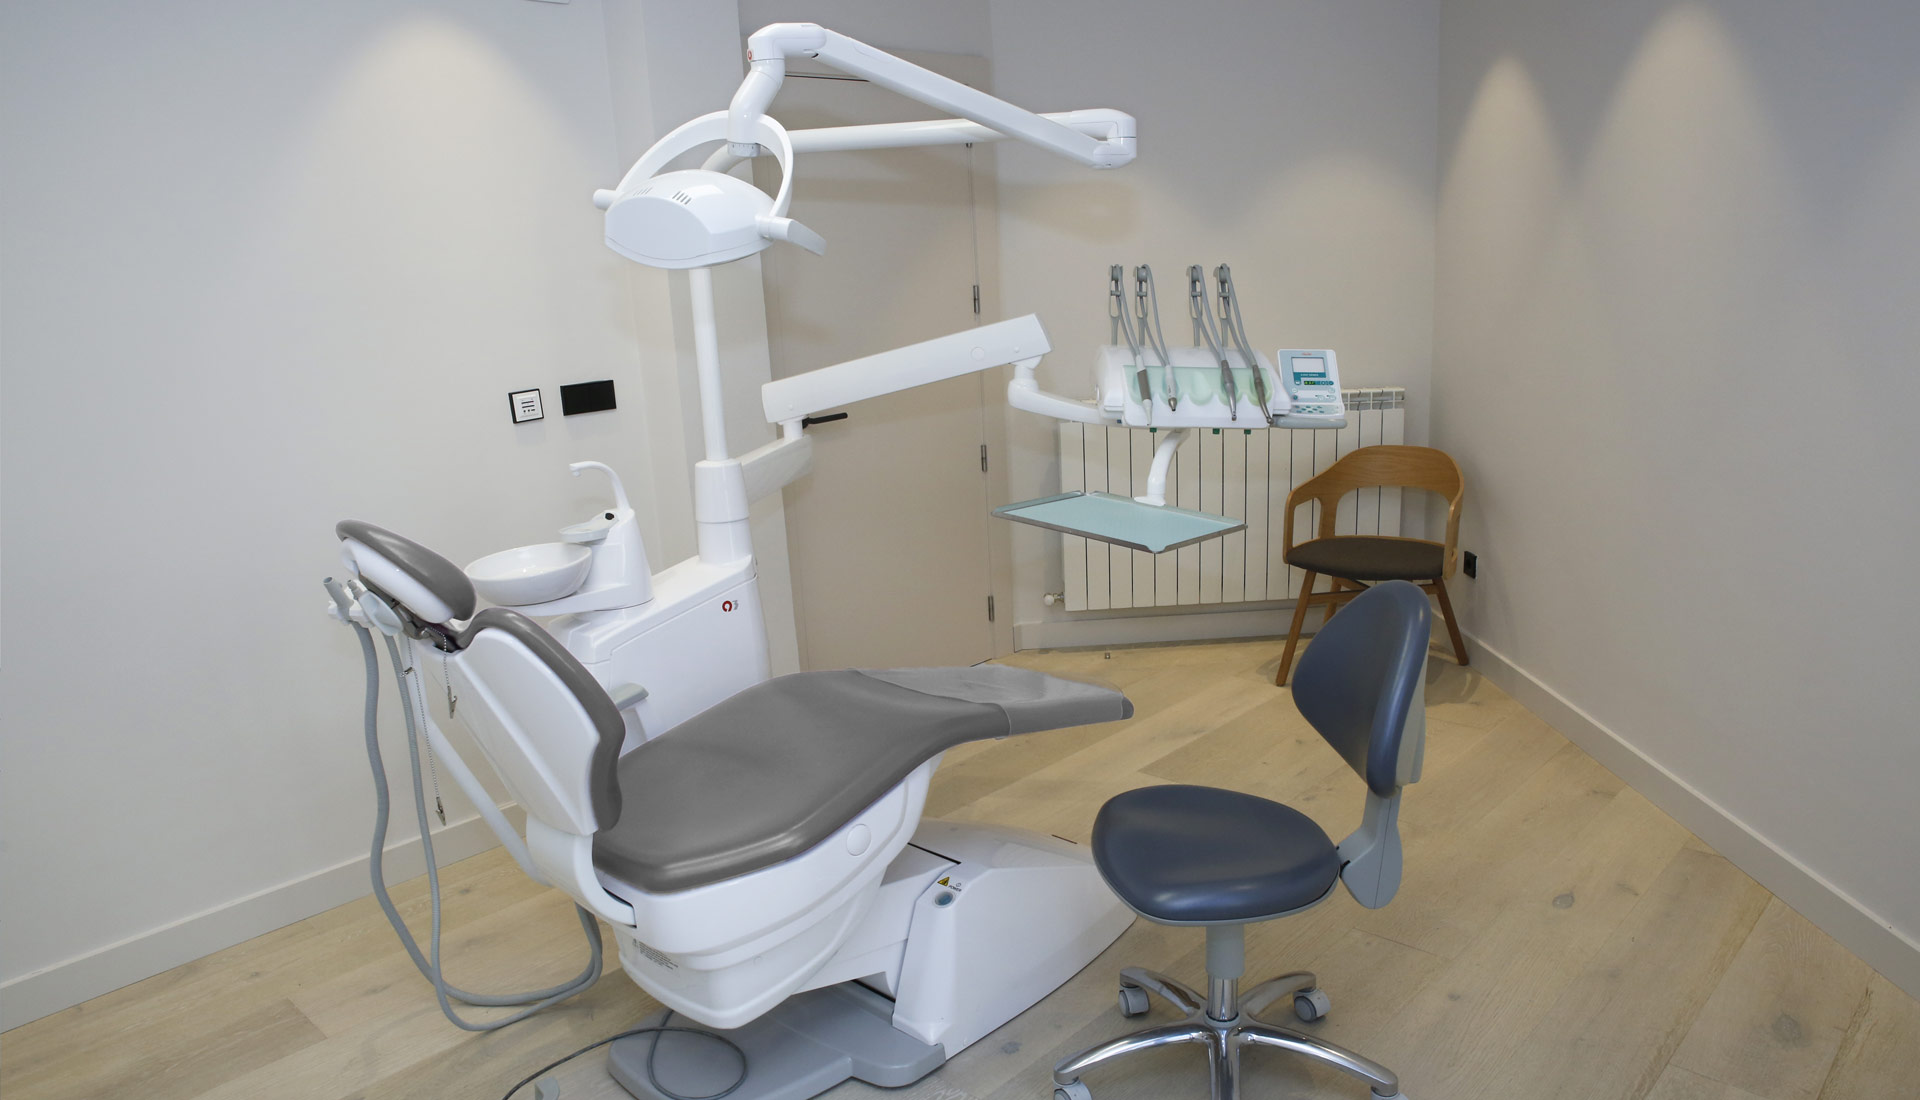 Artdental-Clinica-Dental-Gabinete-Valtierra-Nuevo-2021_33A2408-4